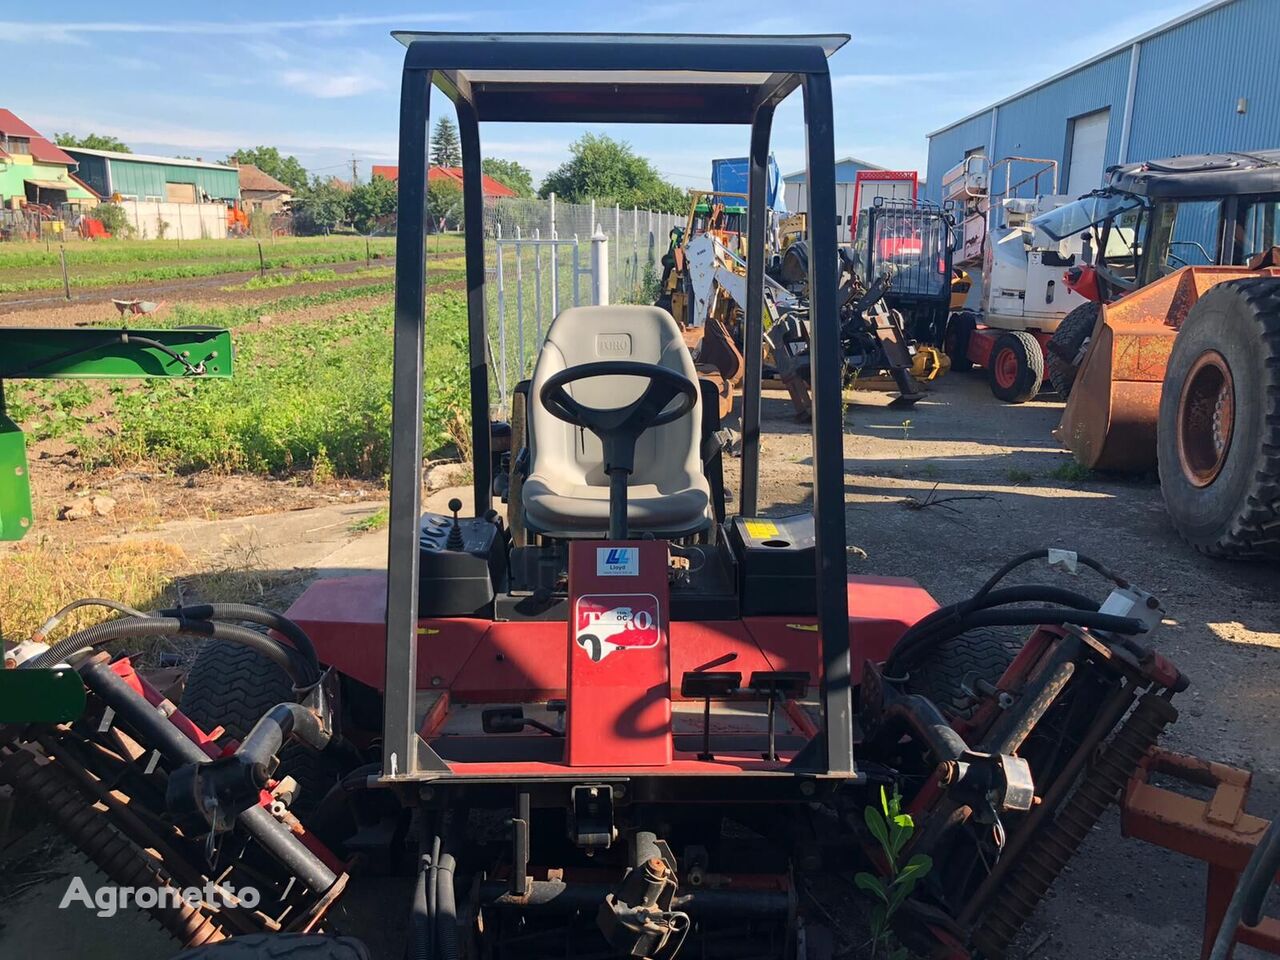 Toro Reelmaster 5500 D lawn tractor